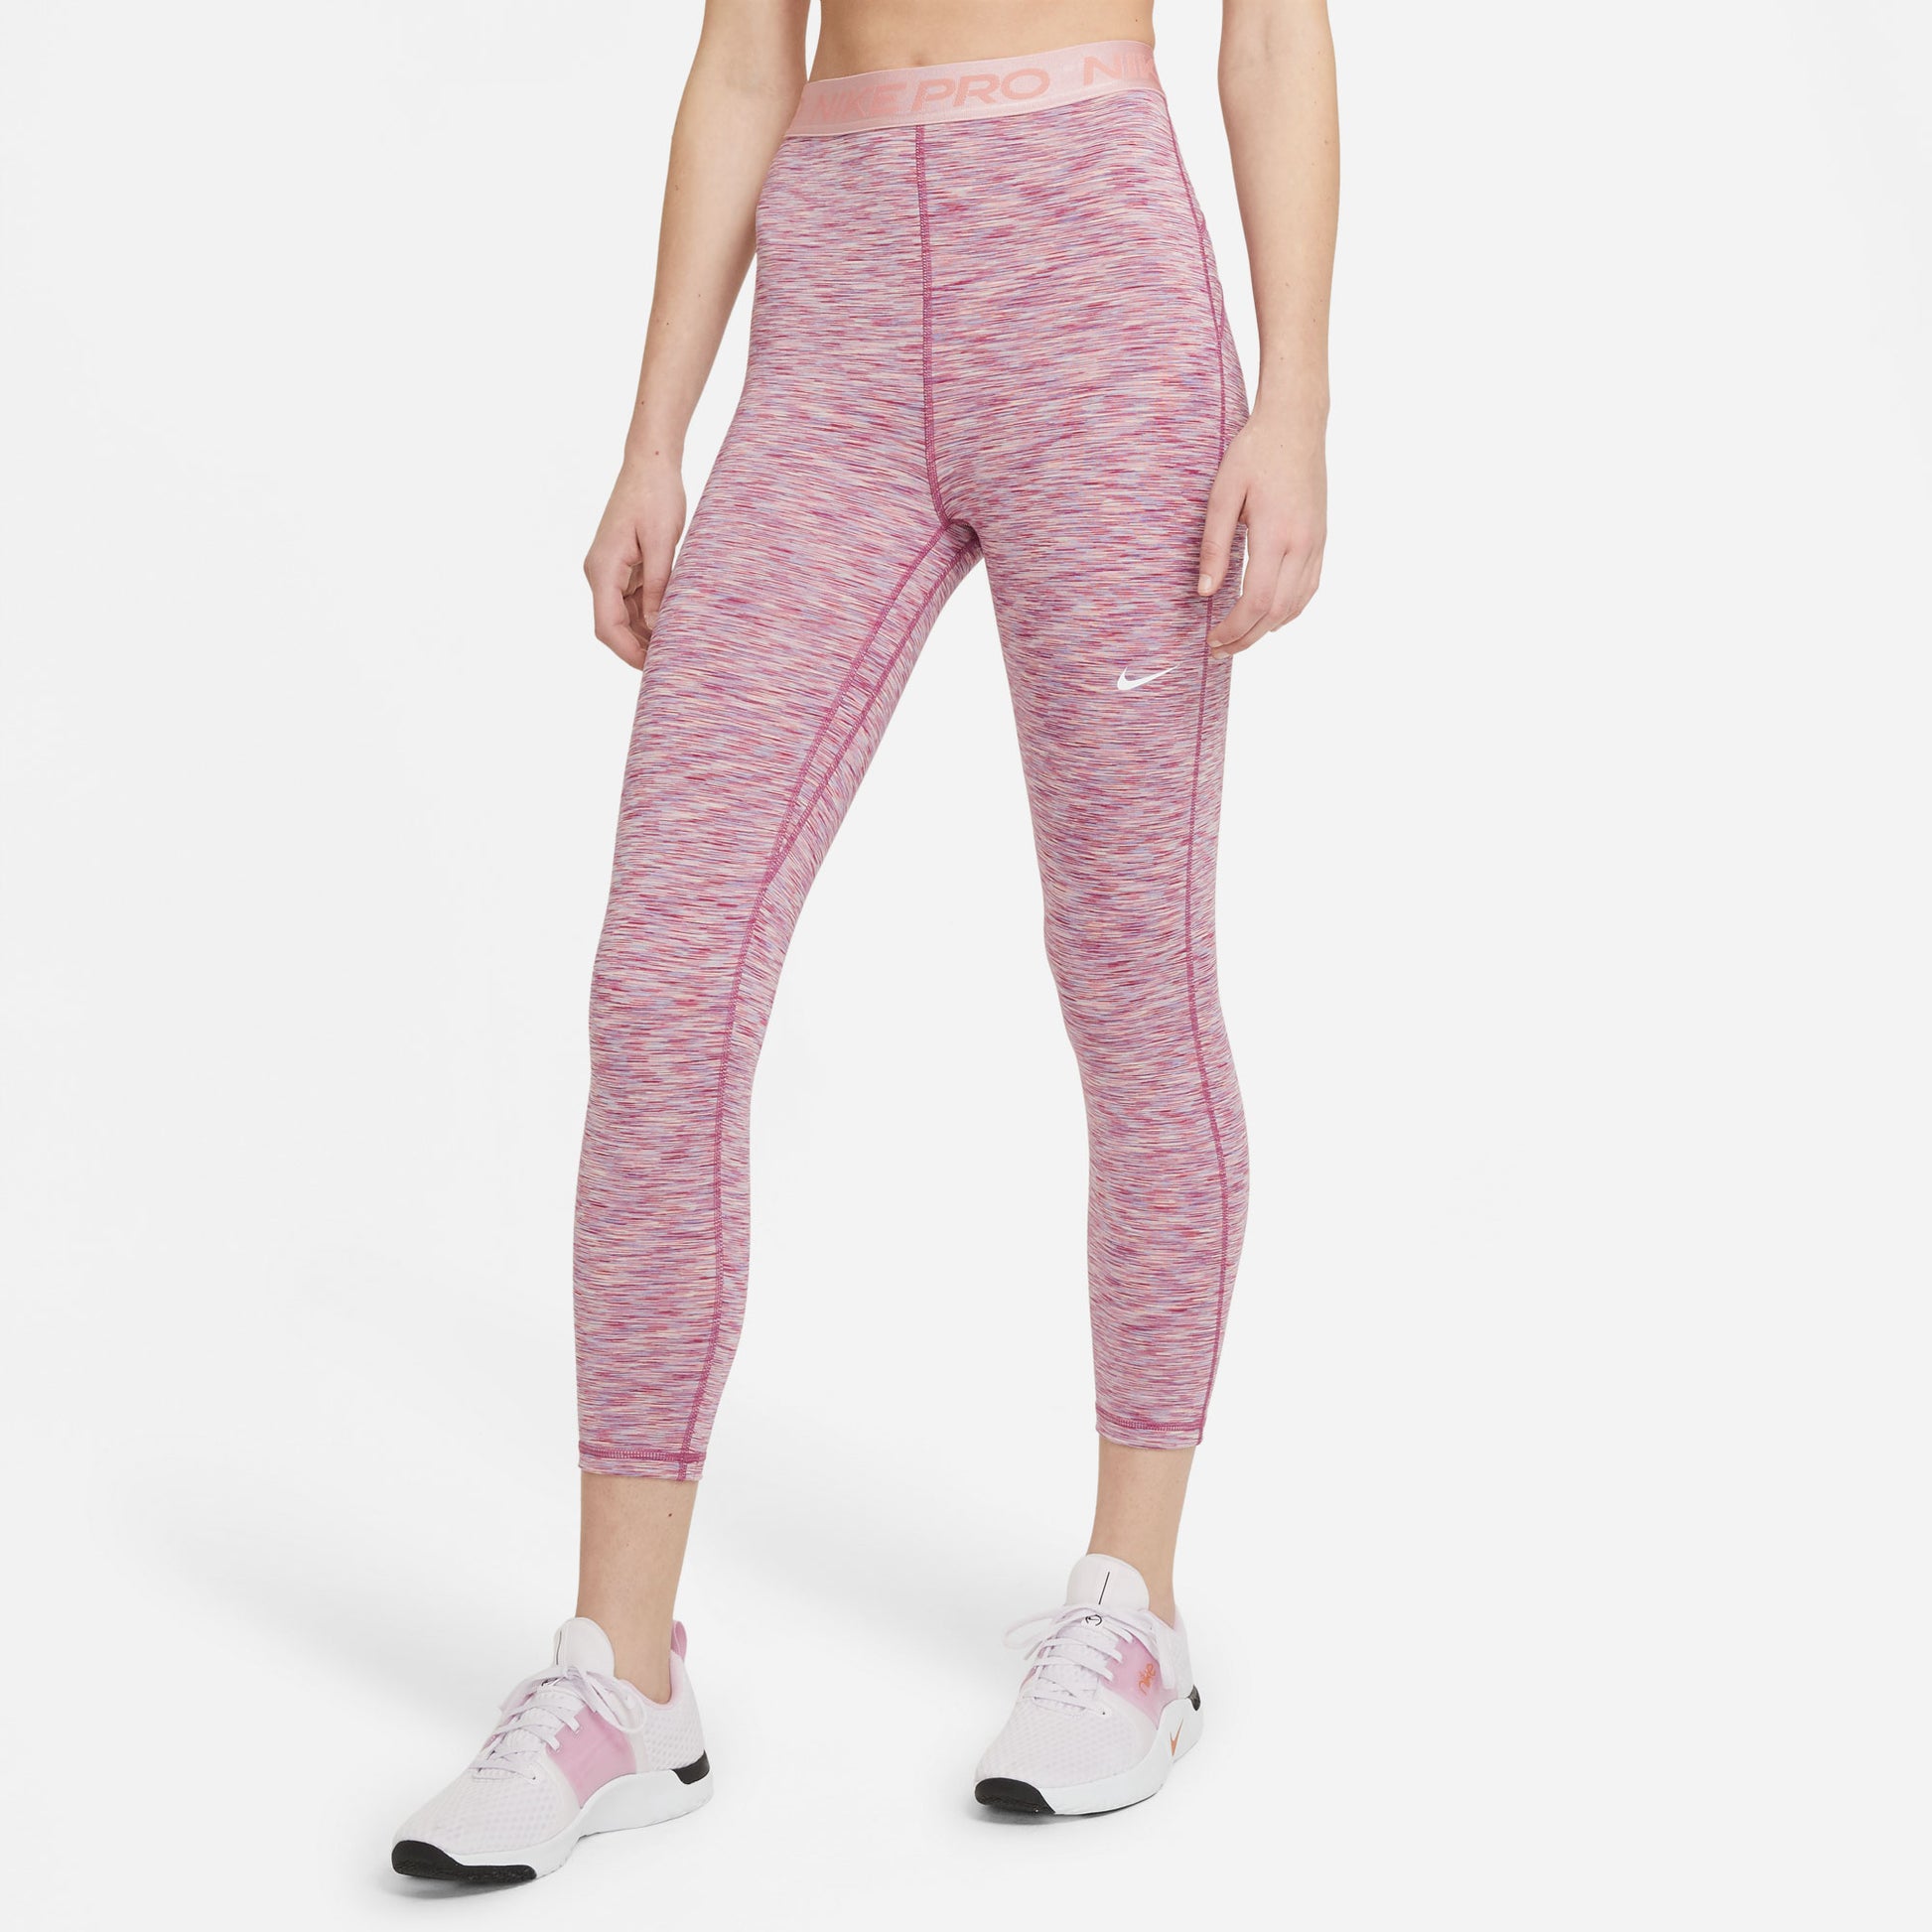 Nike Women's Cropped Space-Dye Tights - Pink